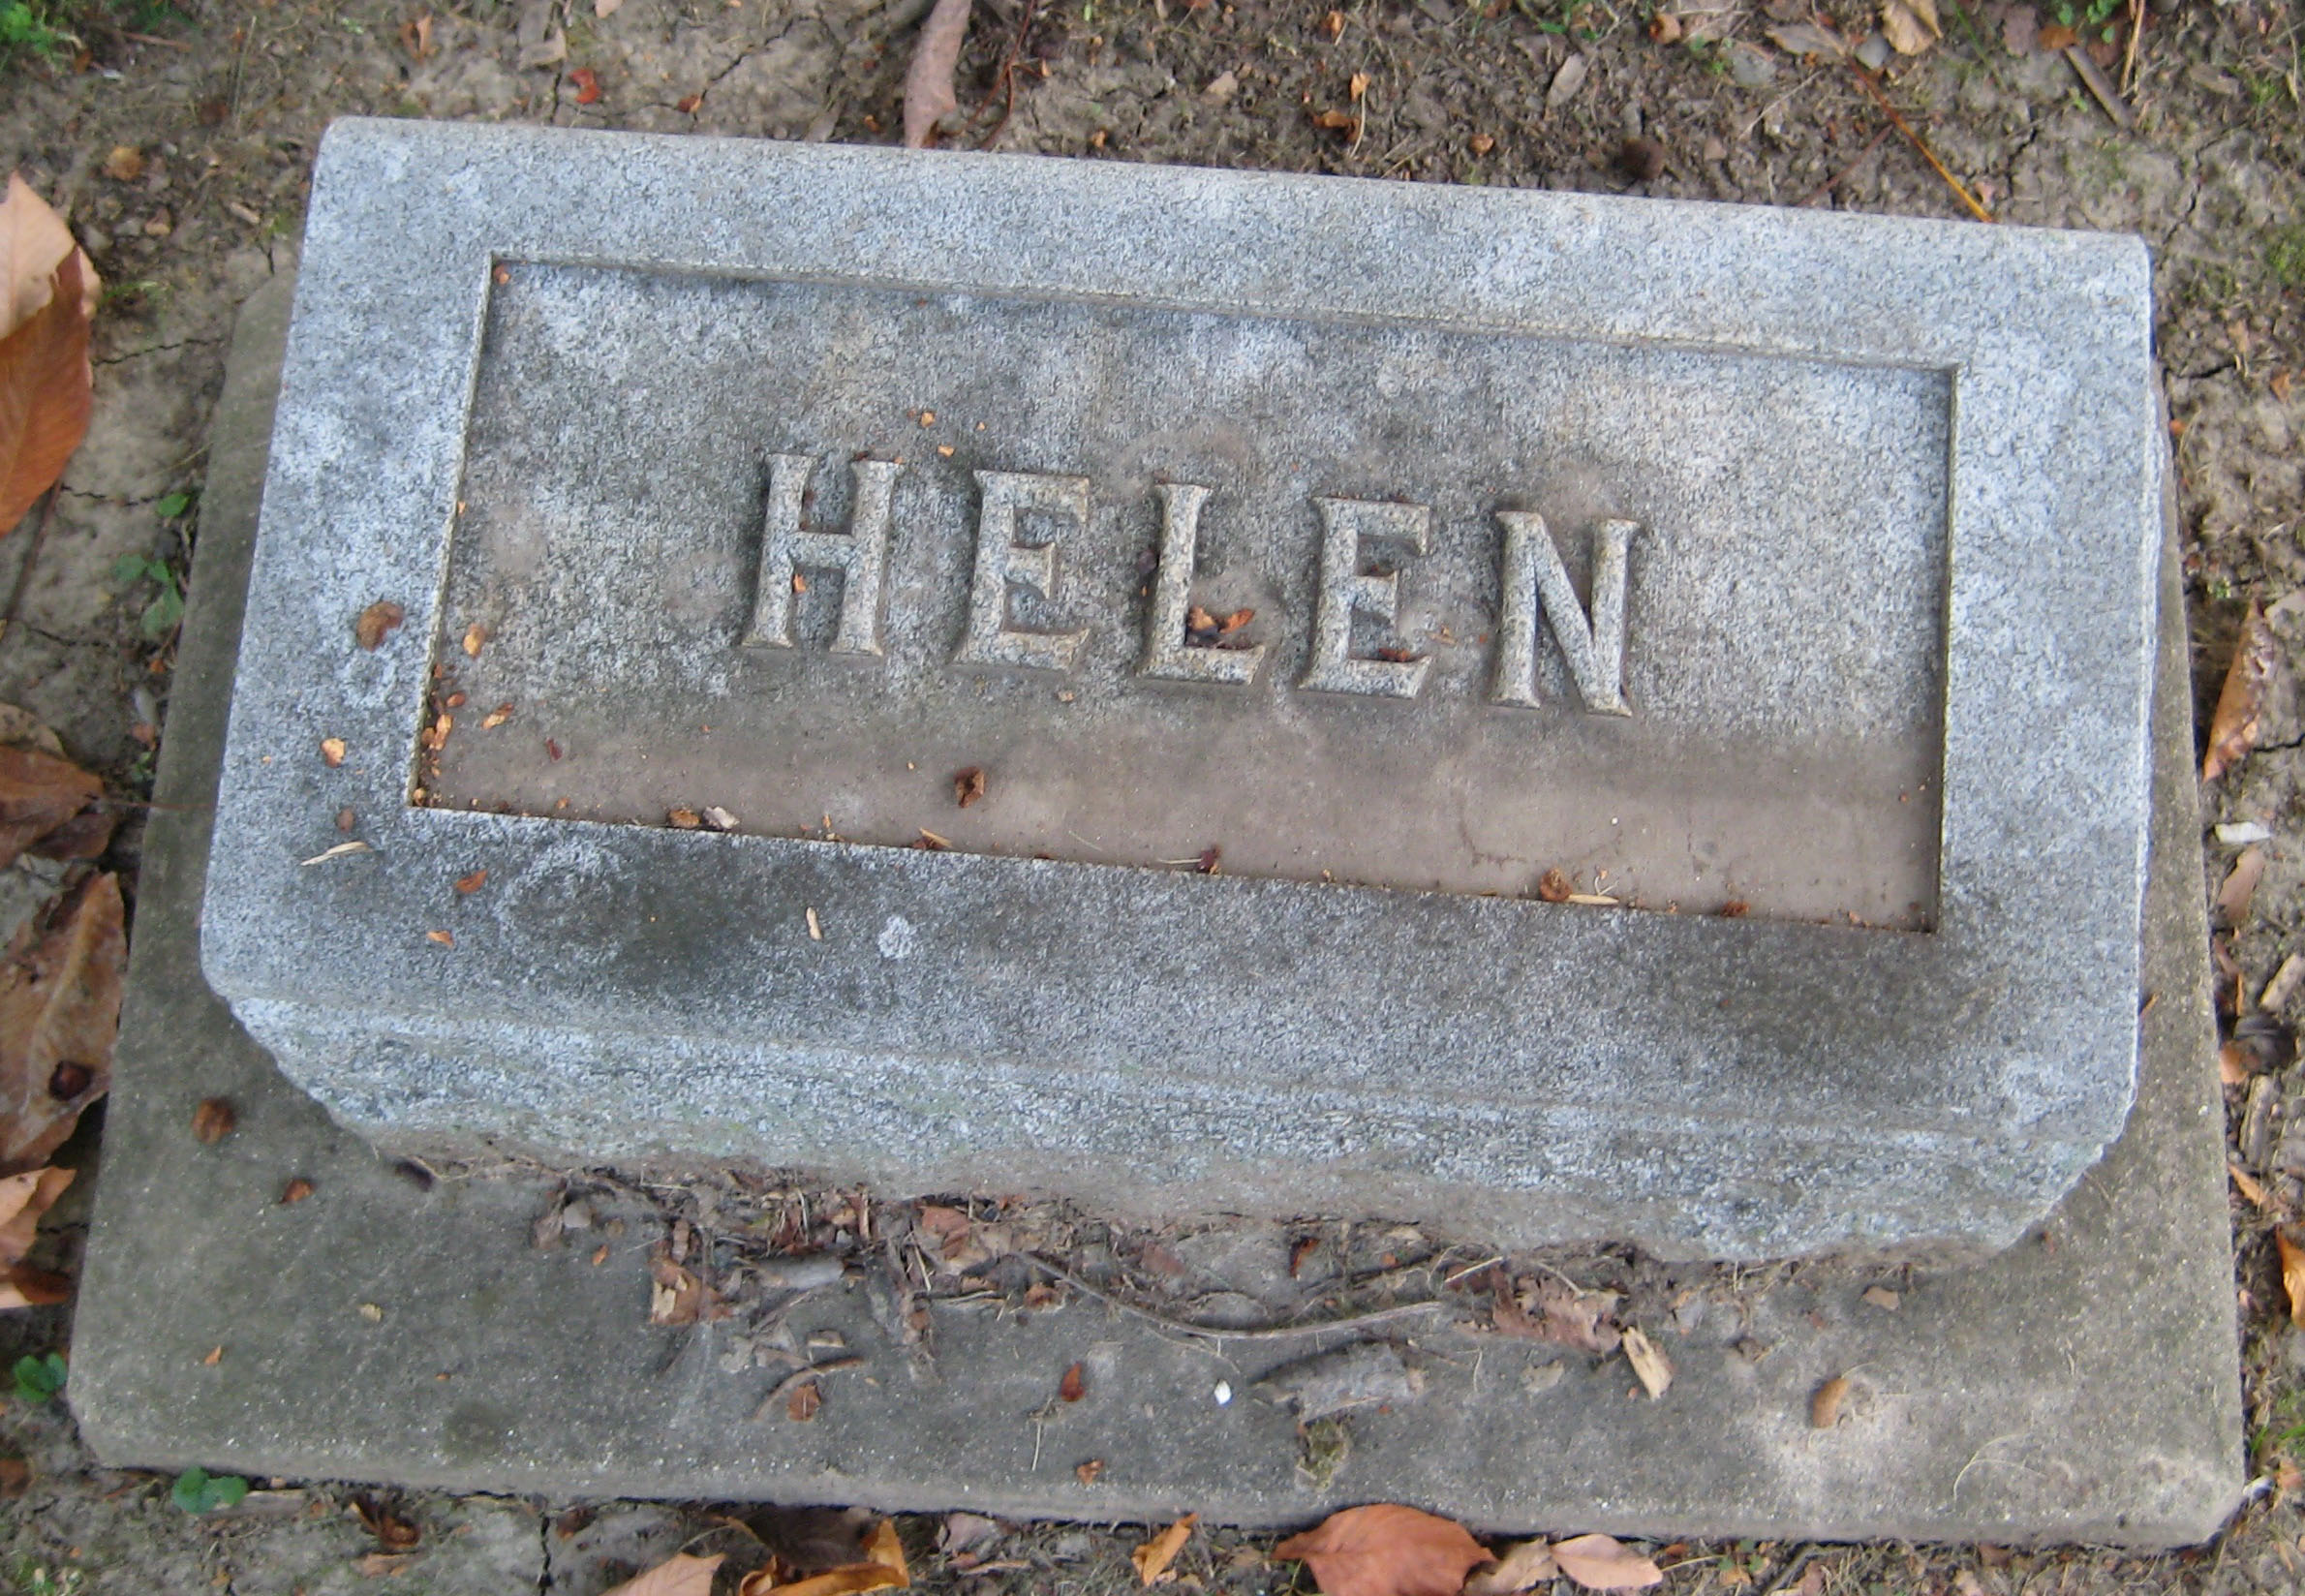 Deutsch, Helen